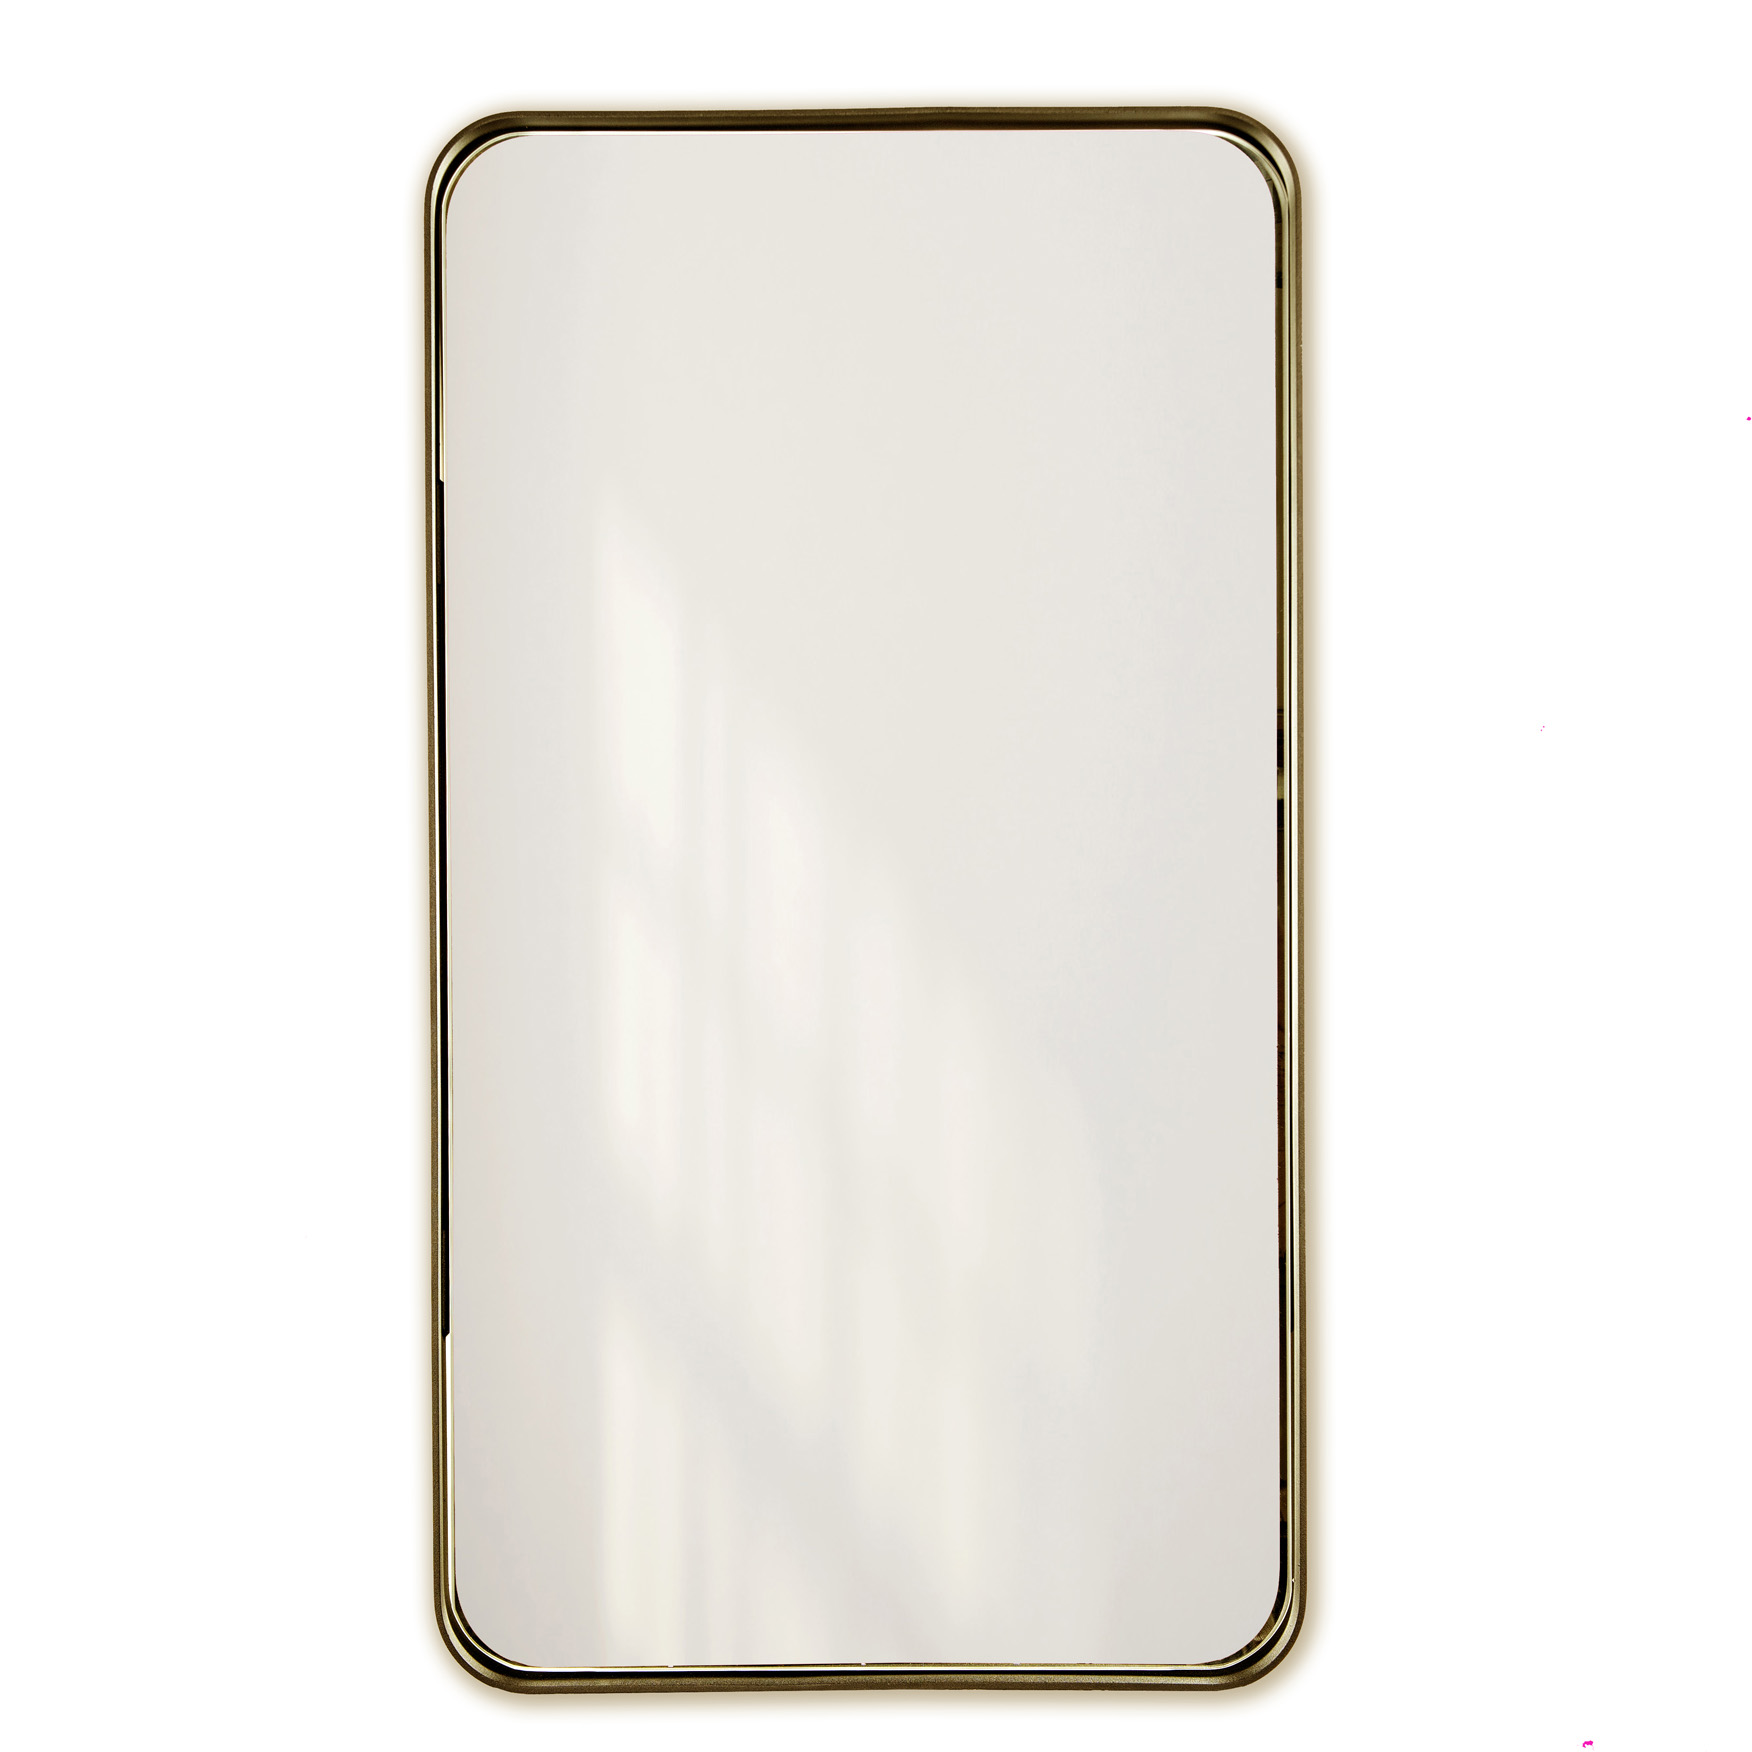 Spiegel OVALIS Gold M | Rahmen Stahl vintage gold | B/H/T: ca. 50 x 90 x 5 cm